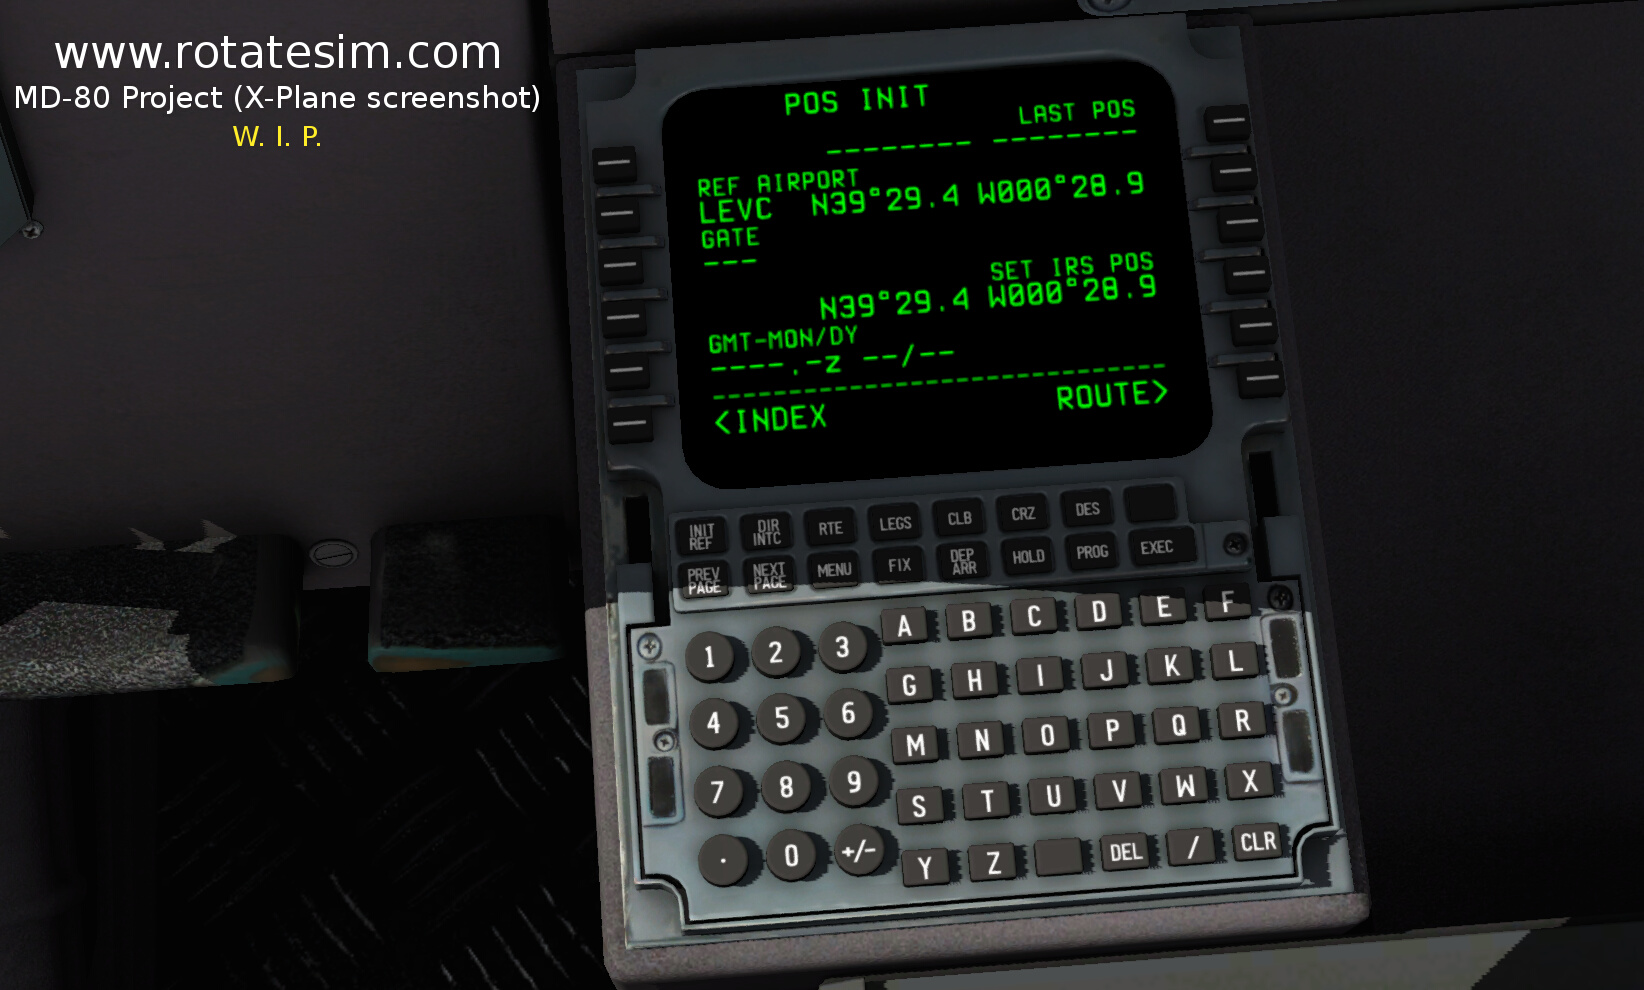 MD-80 screenshot FMC 02 POS INIT